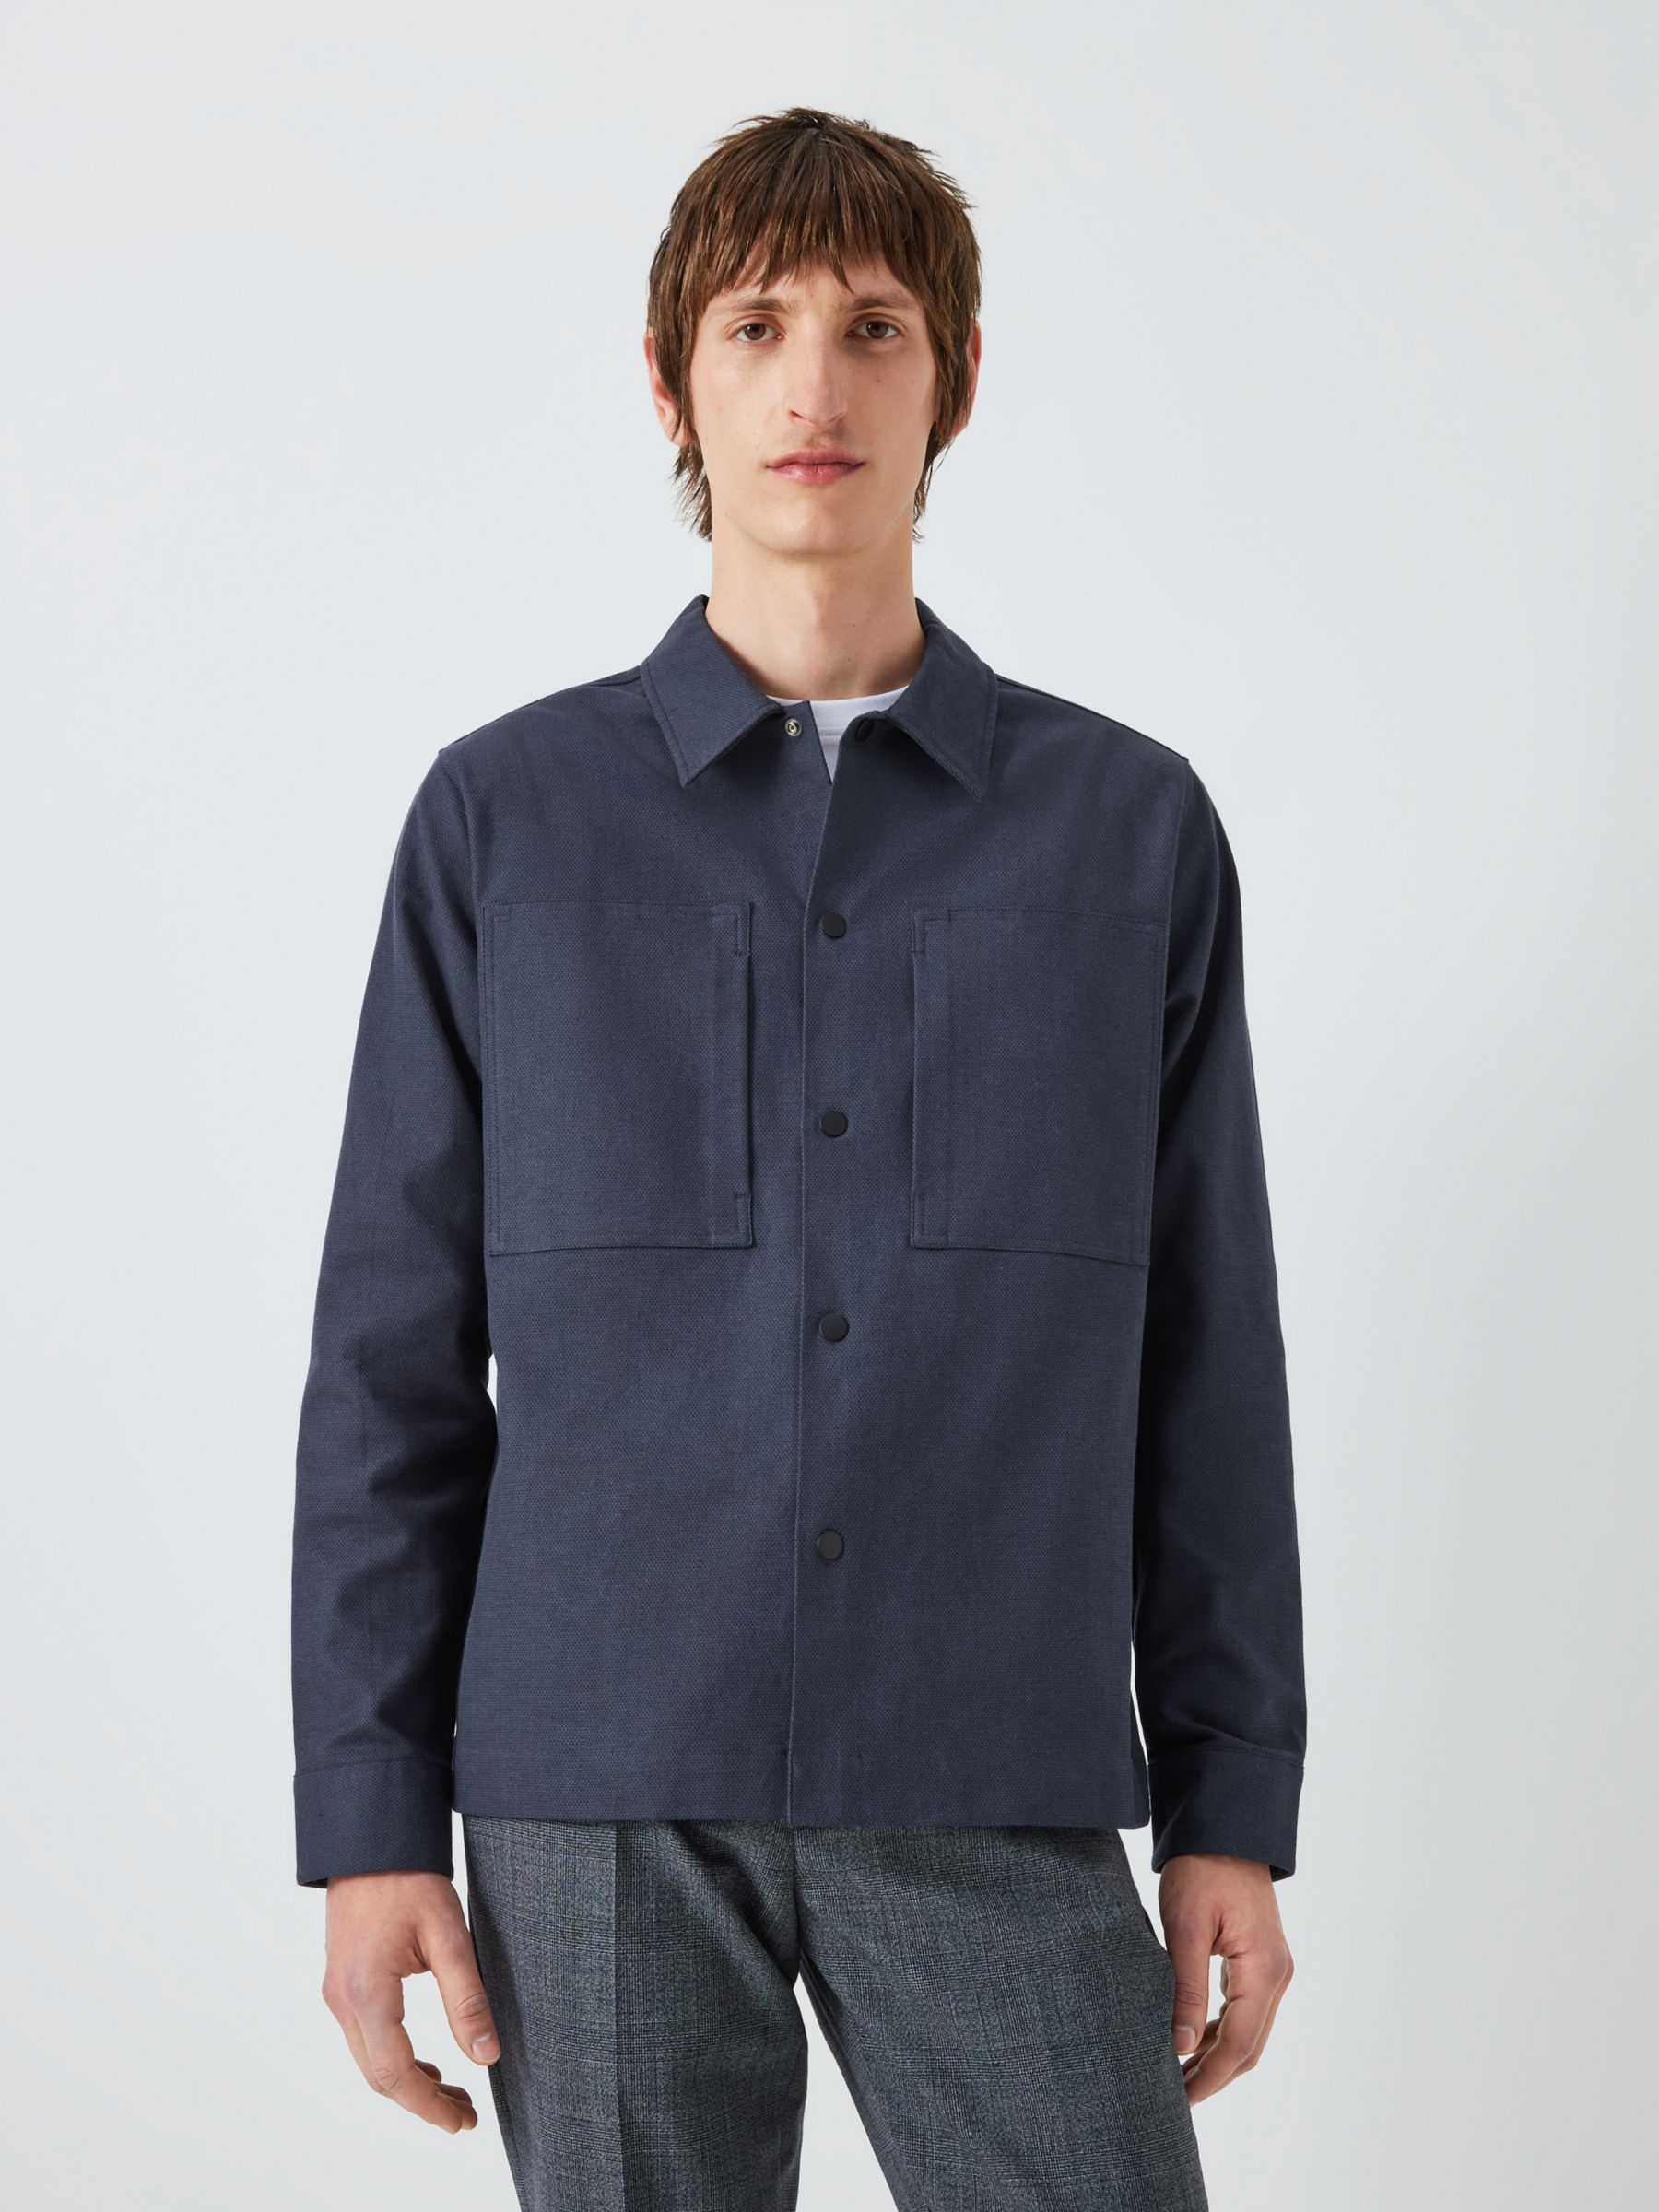 Kin Cotton Textured Stretch Overshirt, Slate Blue at John Lewis & Partners